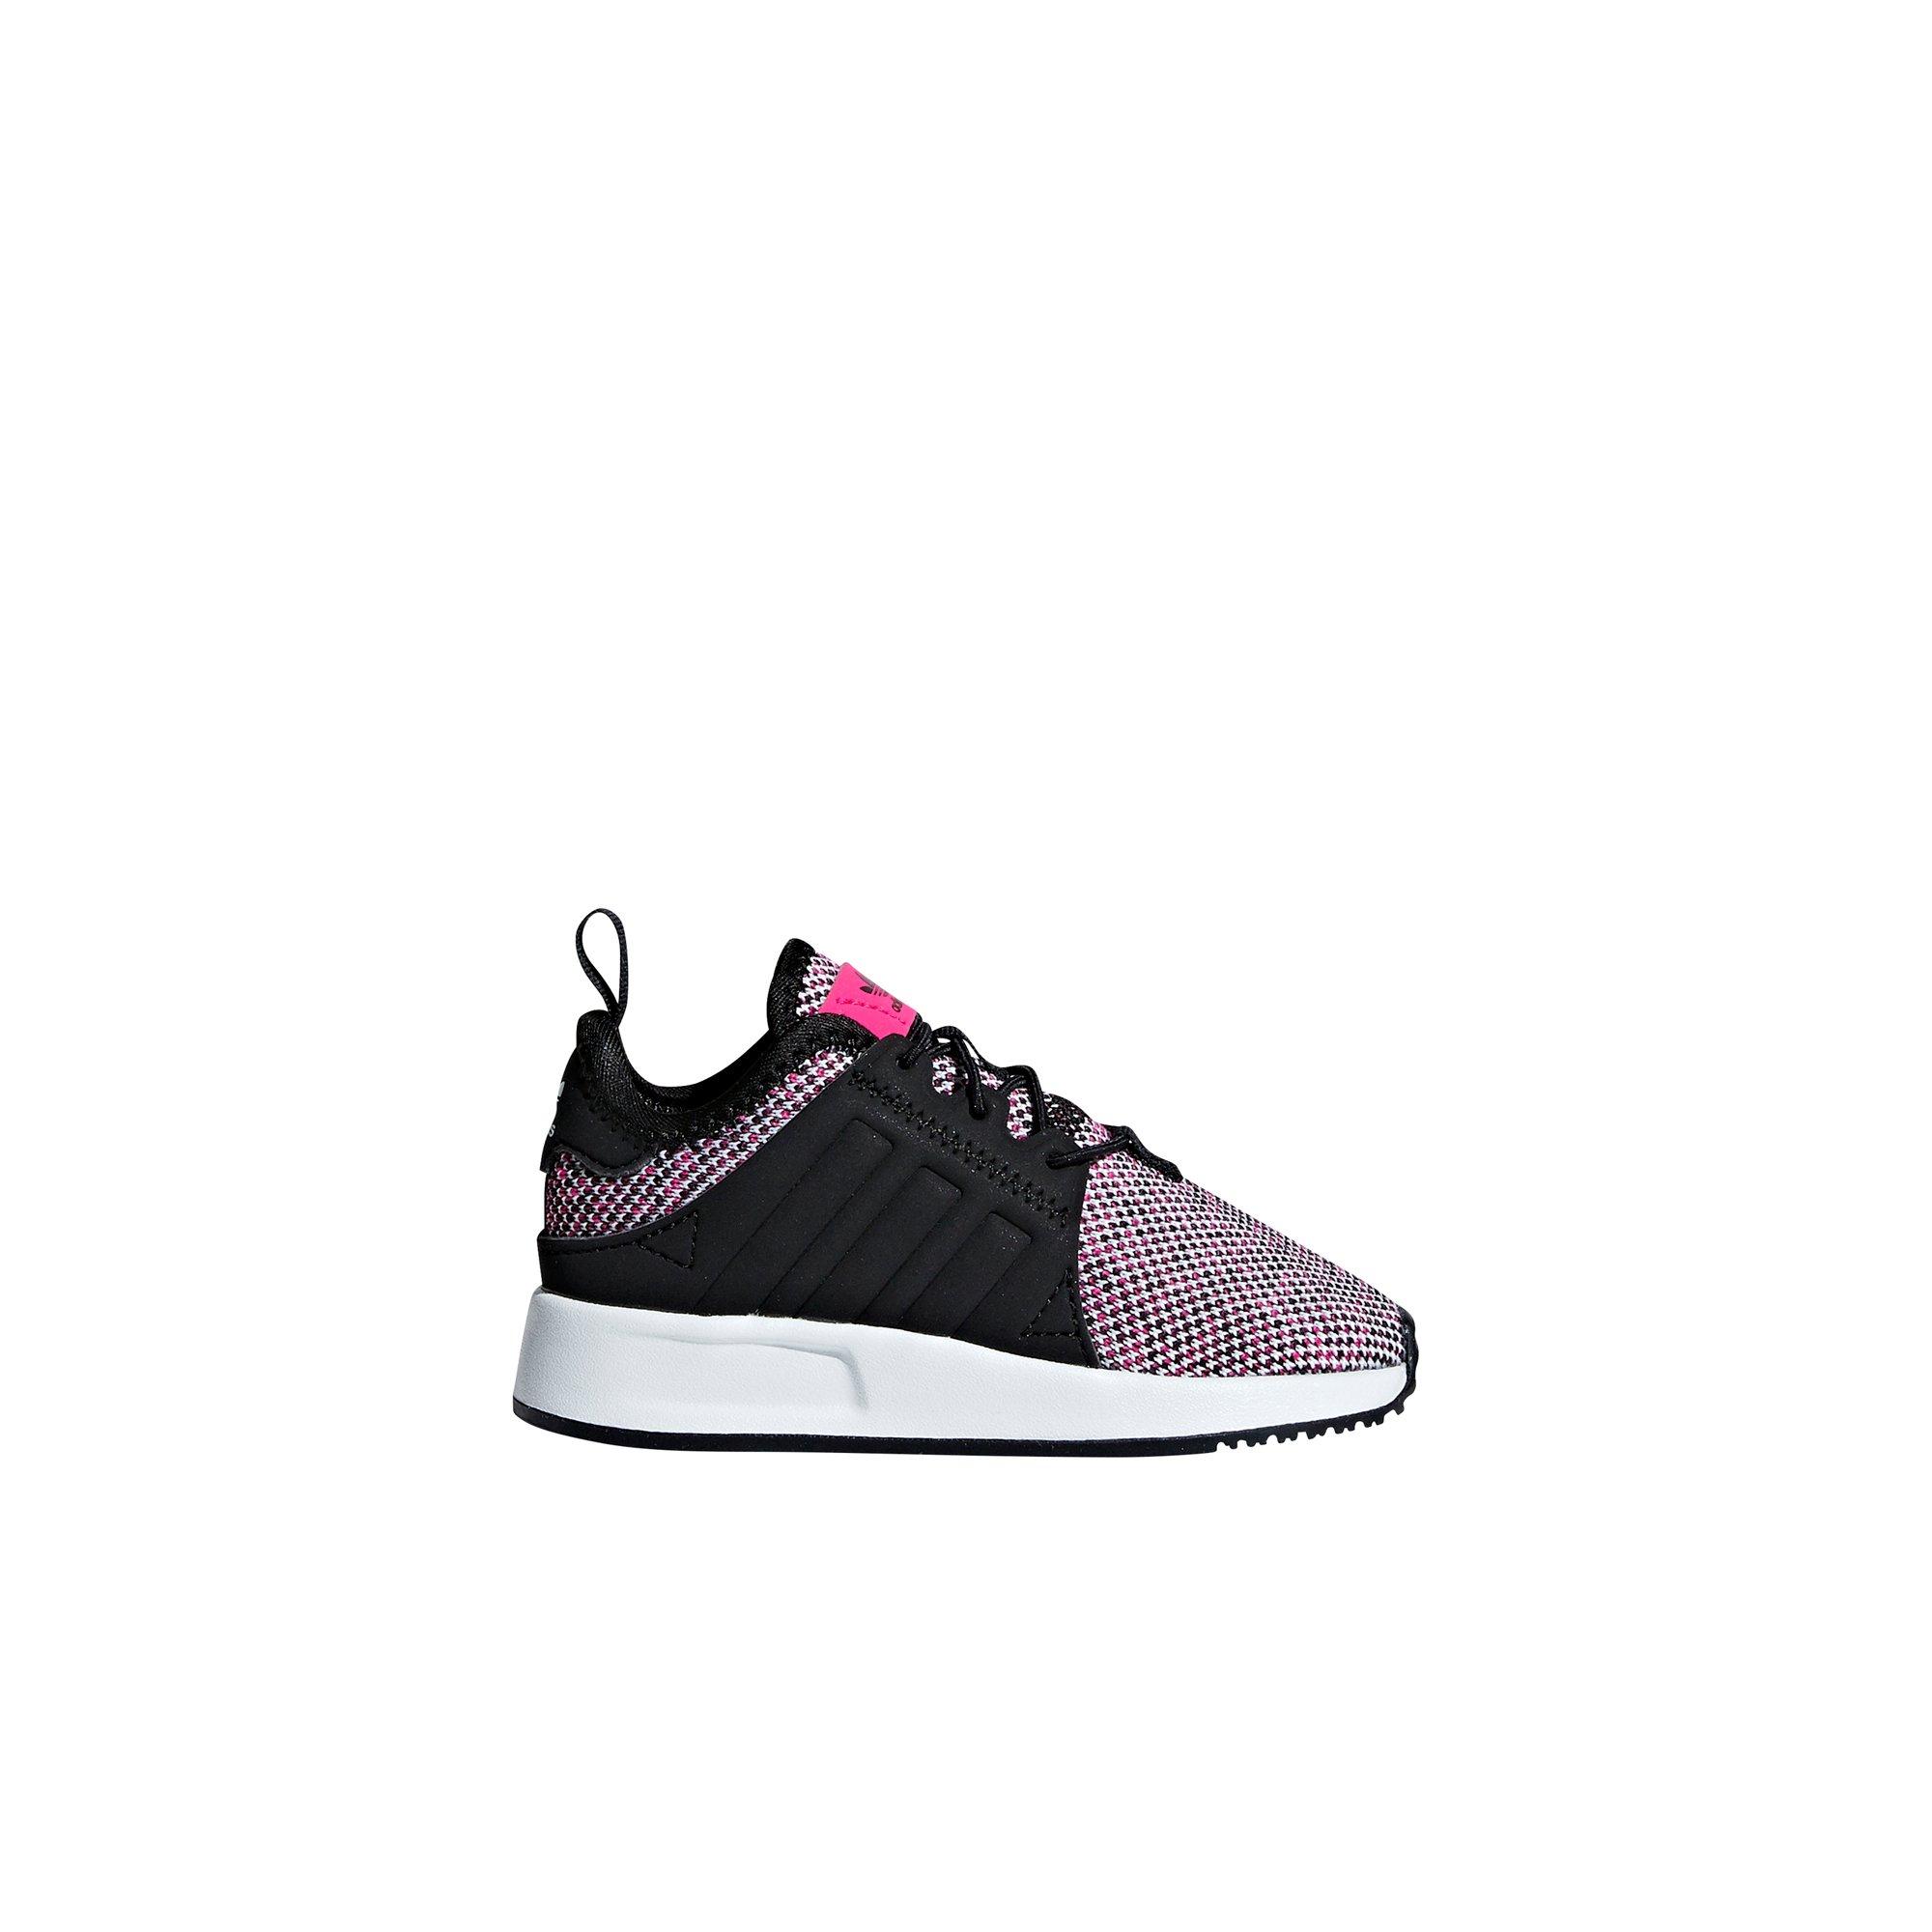 adidas x_plr pink